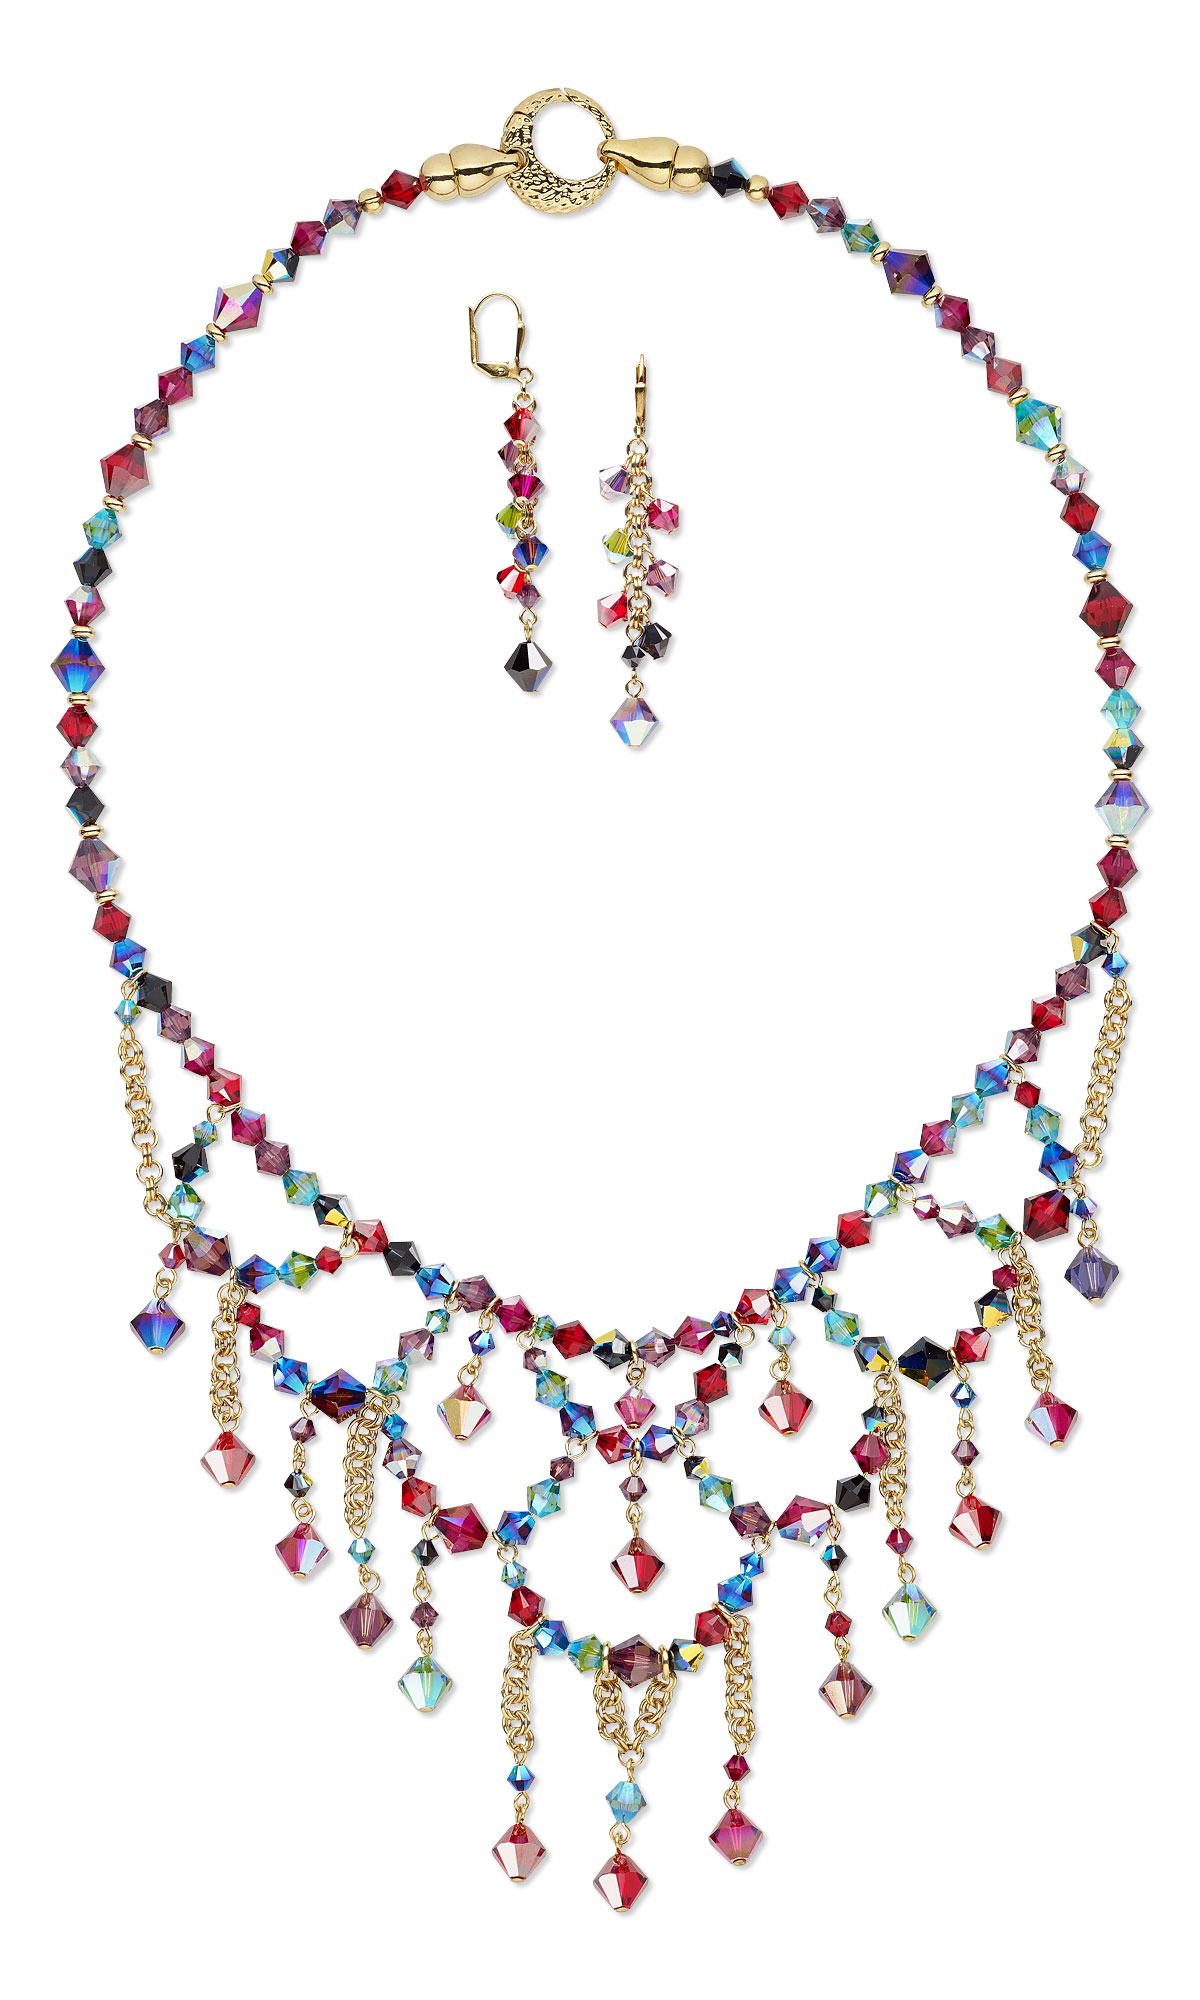 Jewelry Design - Bib-Style Necklace and Earring Set with Swarovski ...